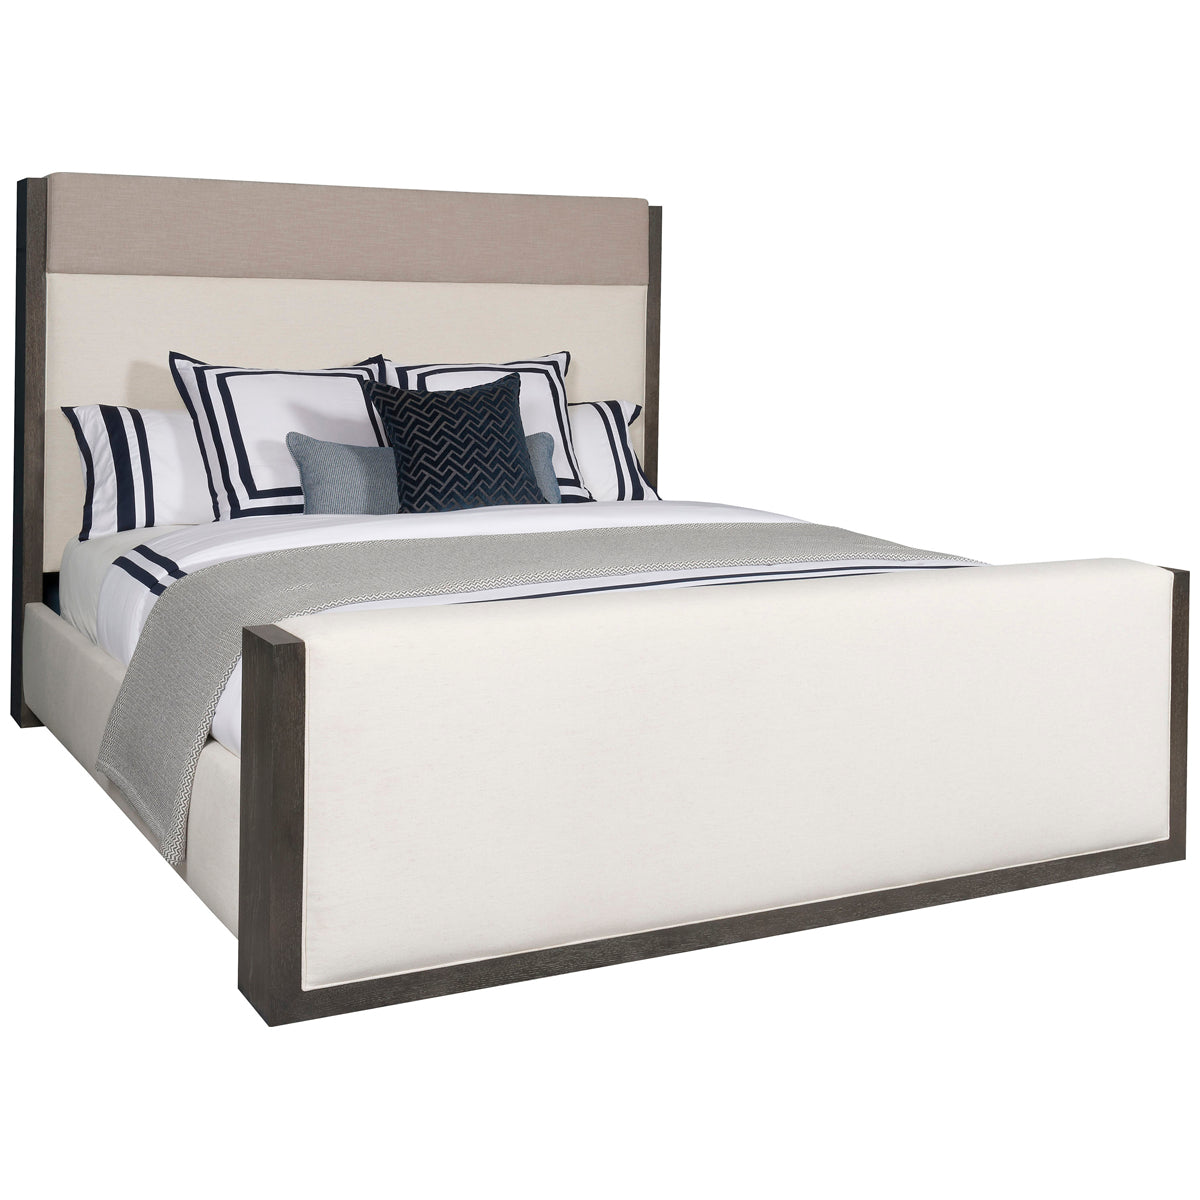 Vanguard Furniture Howell Bed